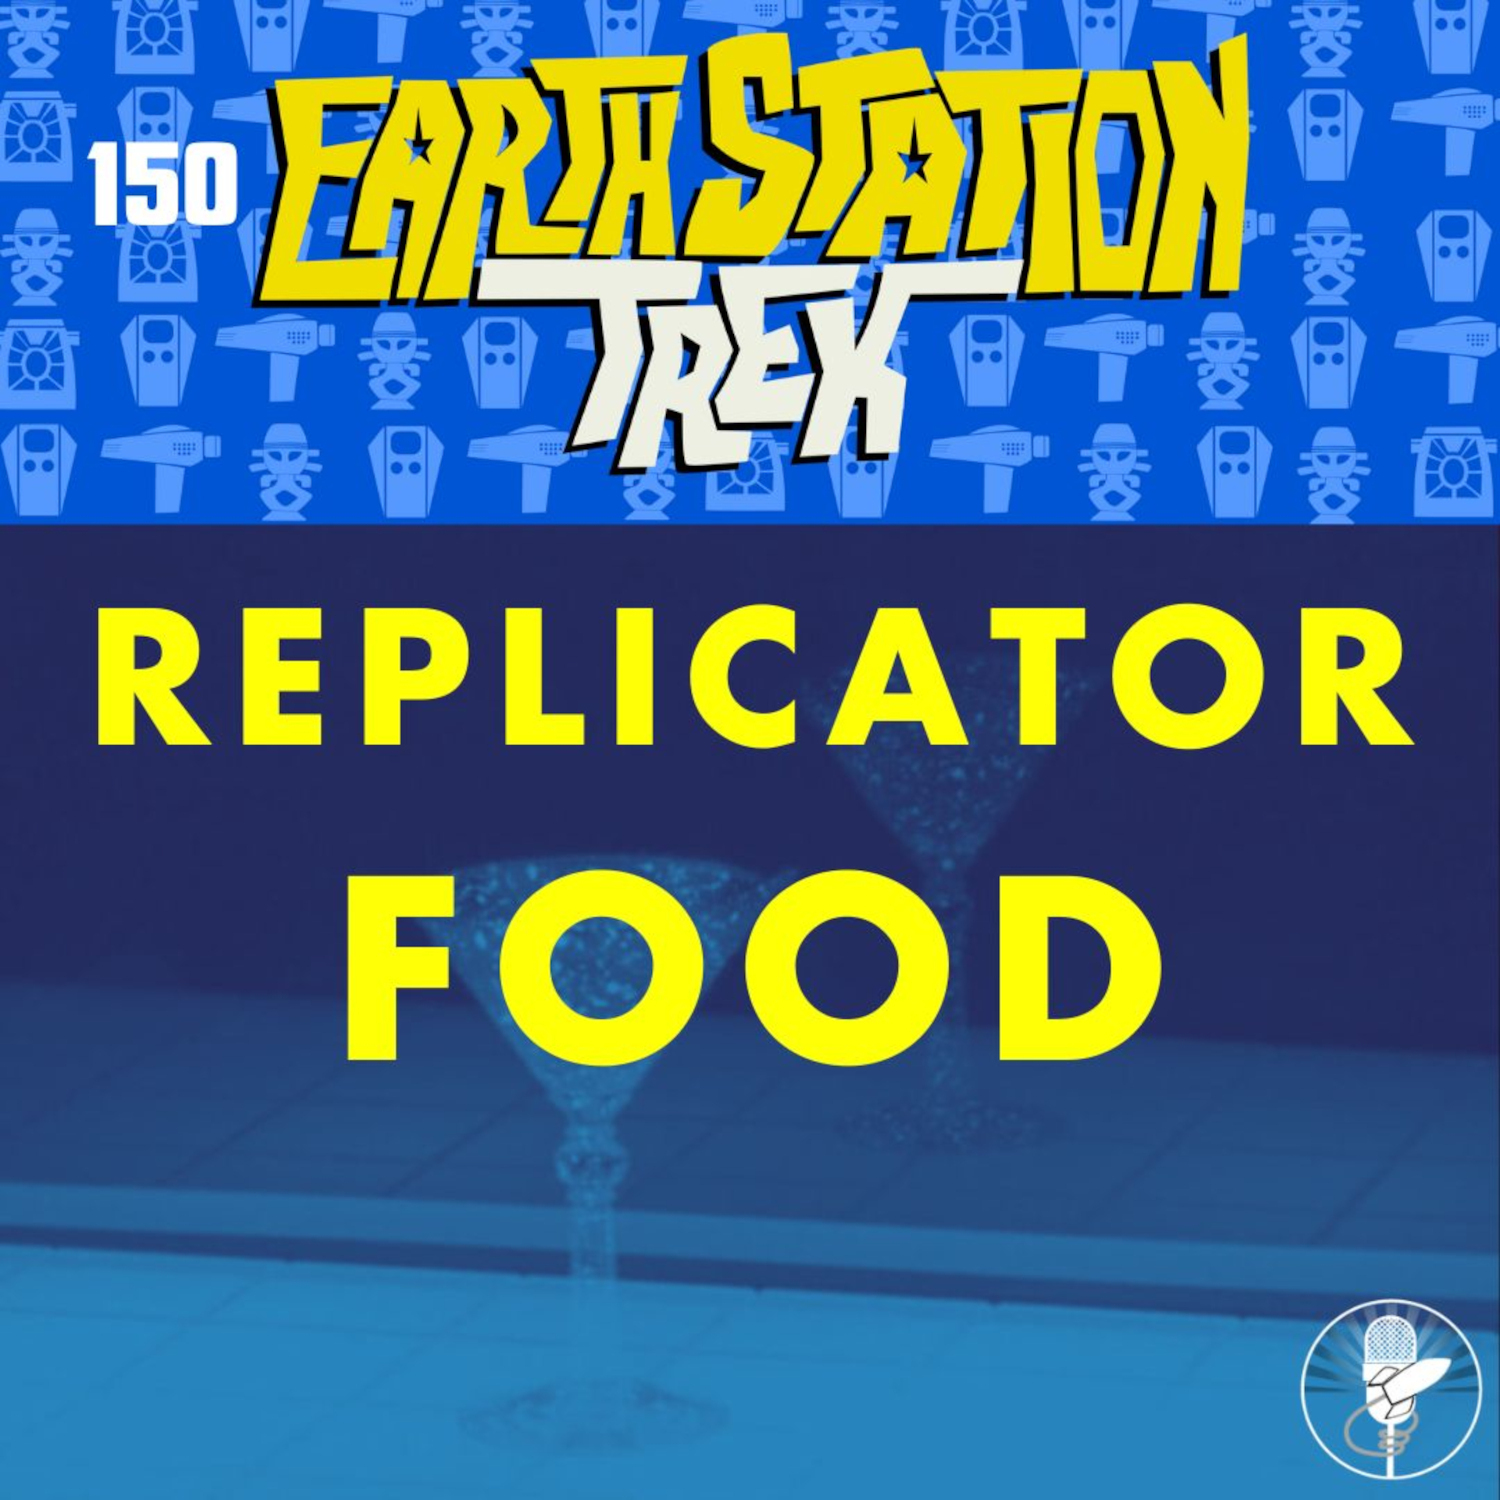 Replicator_Food8ksmj.jpg